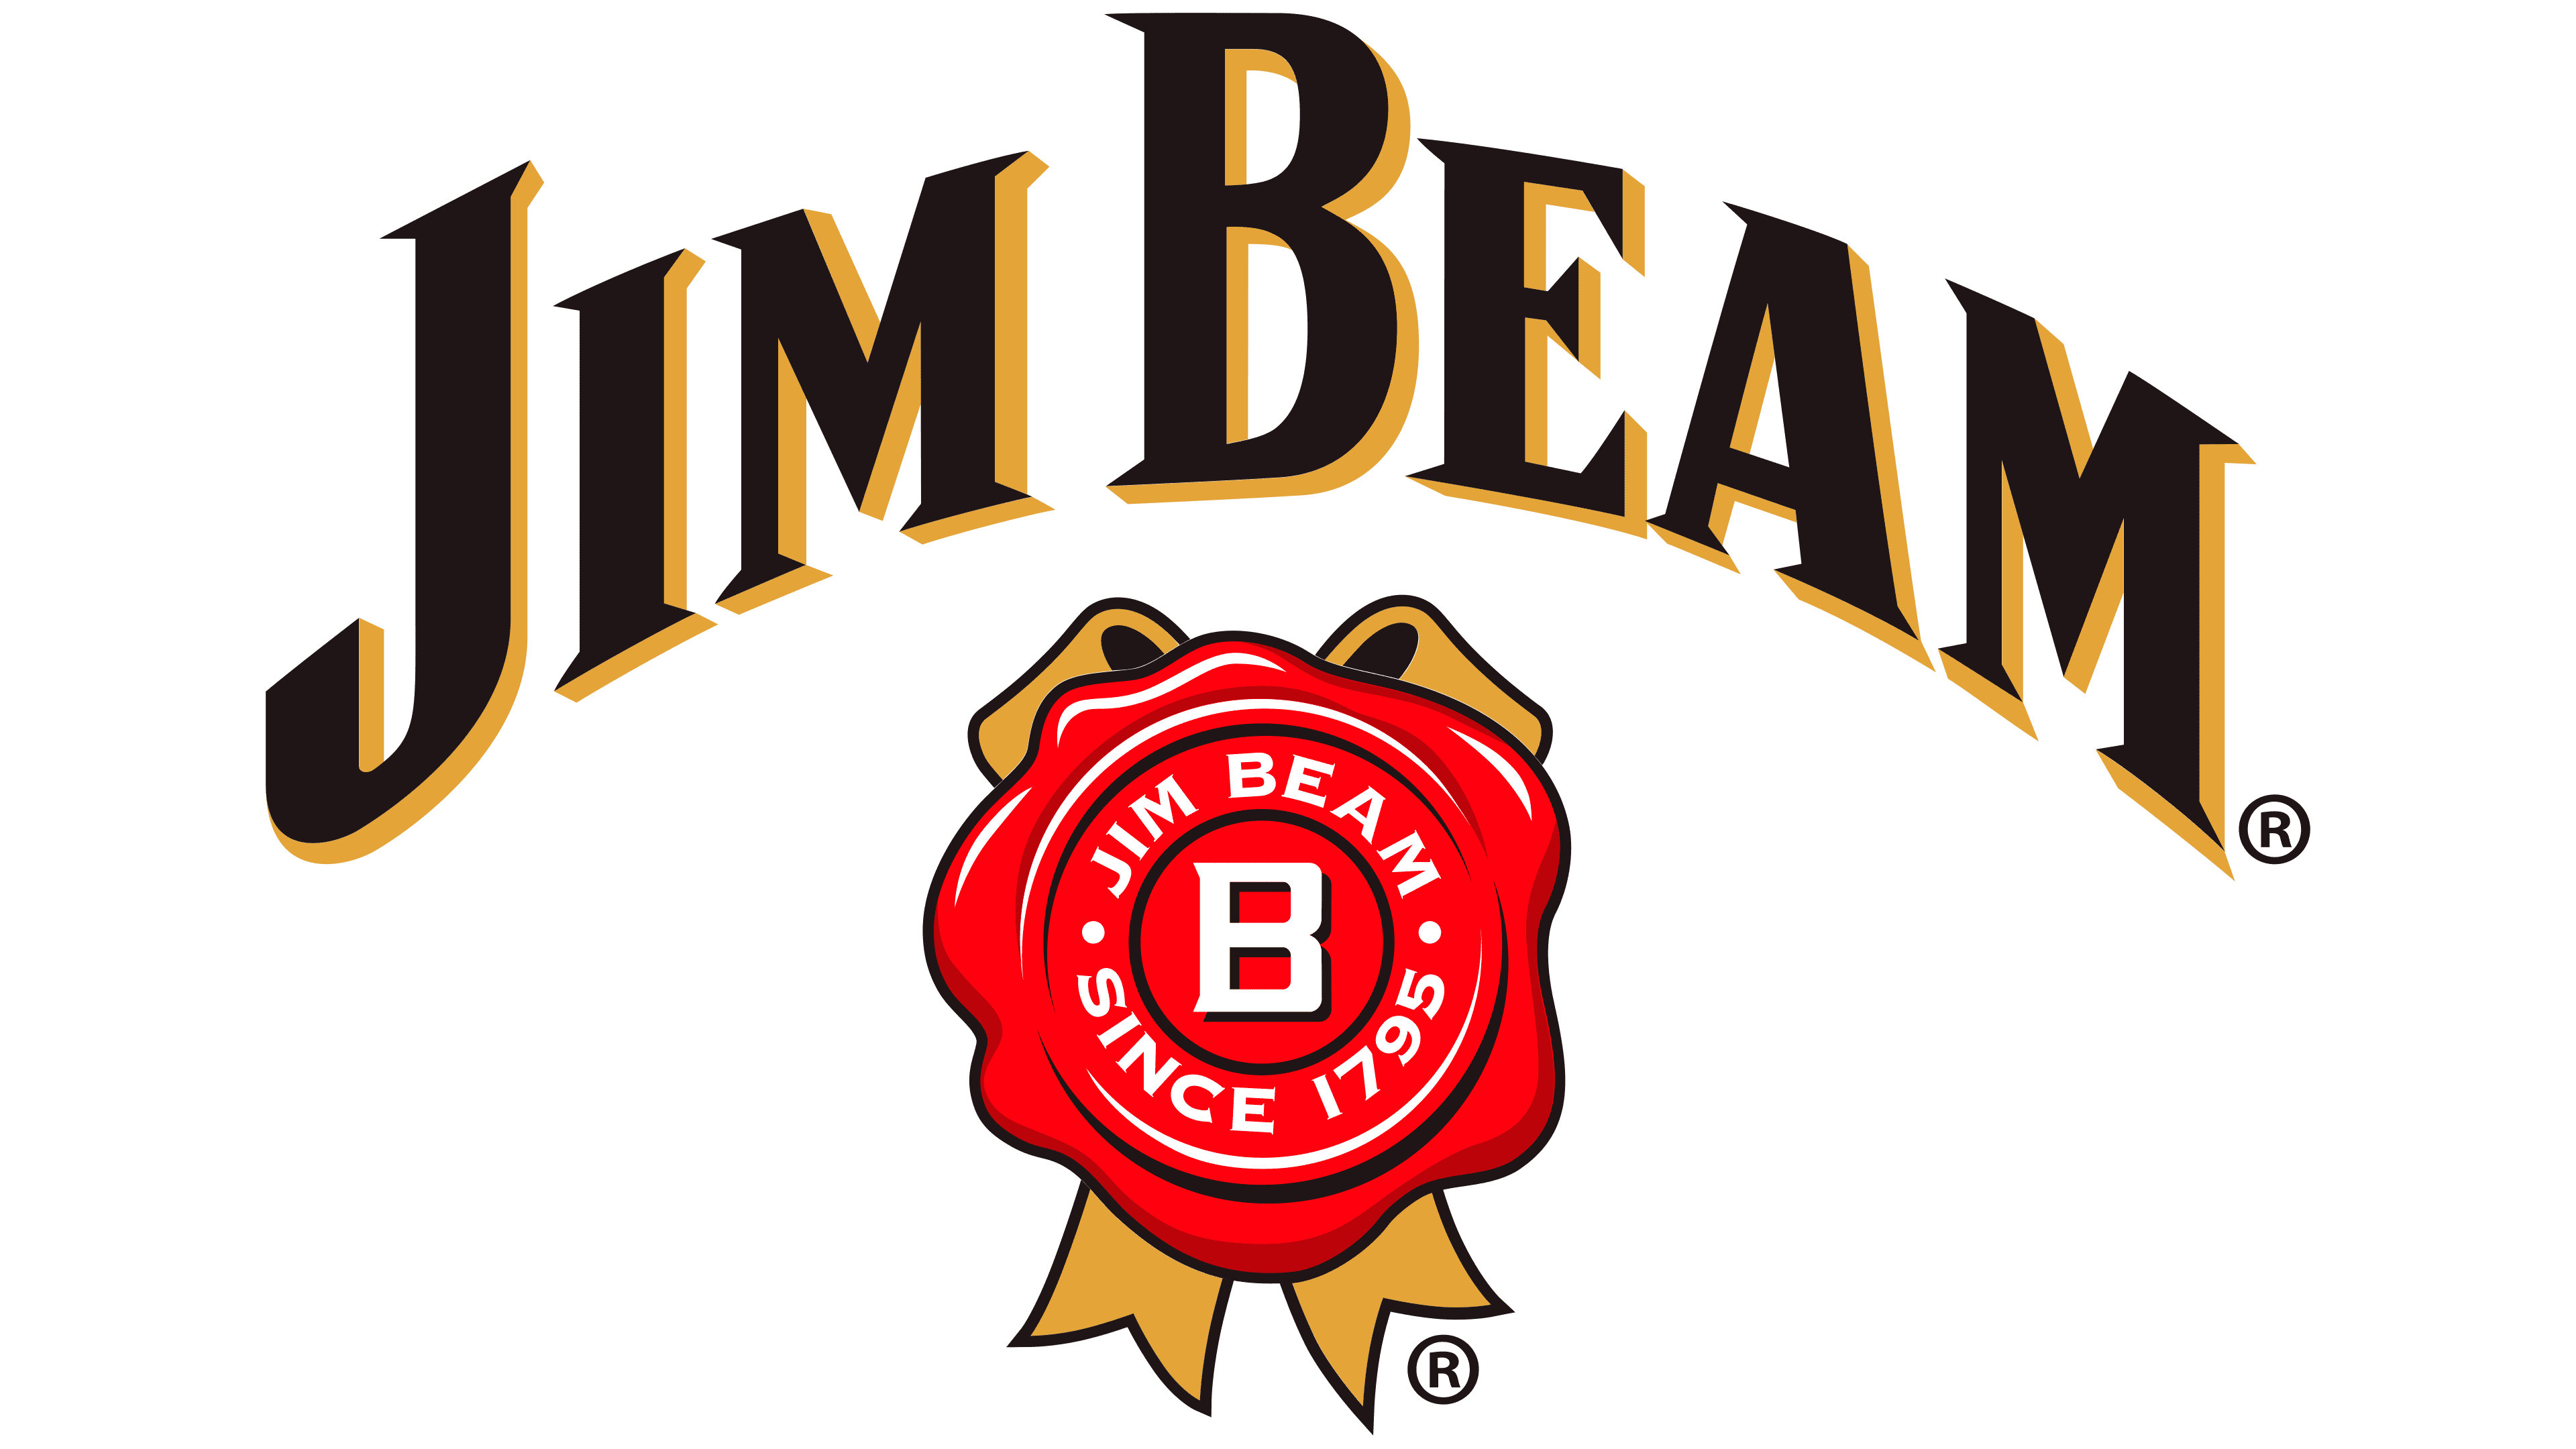 jim-beam-logo-valor-hist-ria-png